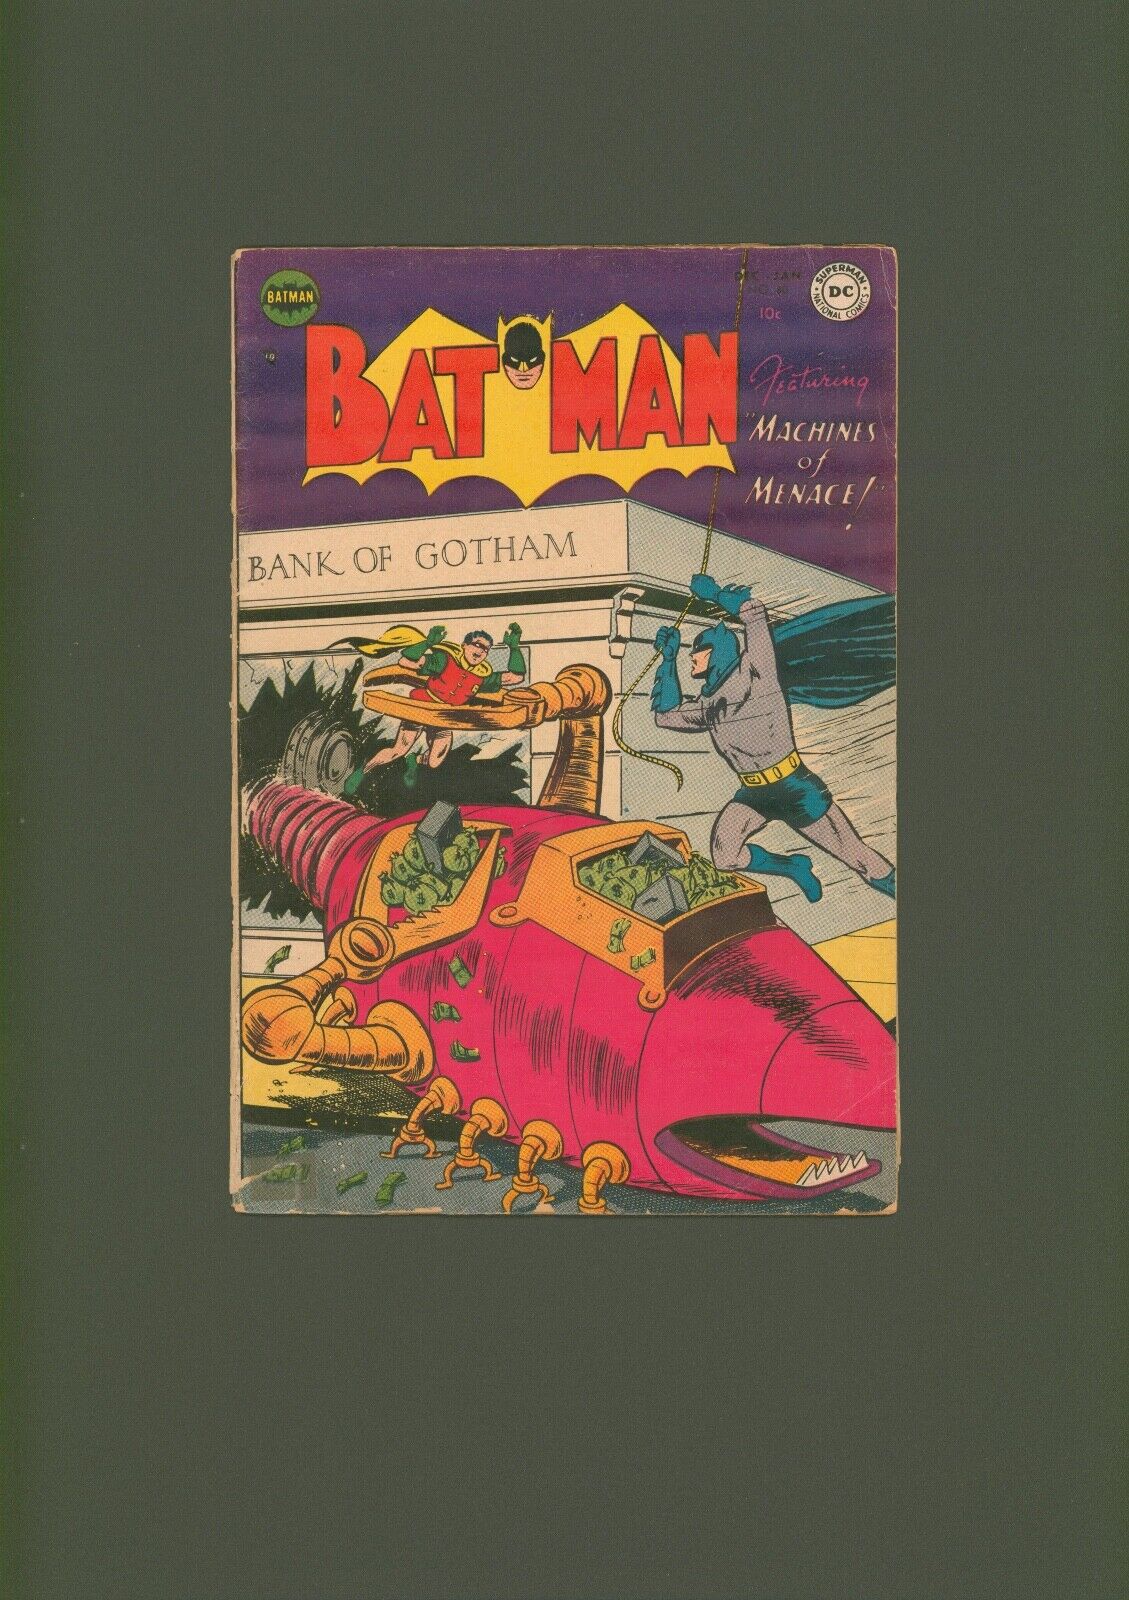 BATMAN #80 "1954" This issue has 3 BATMAN Stories. The 1st features.. The JOKER!